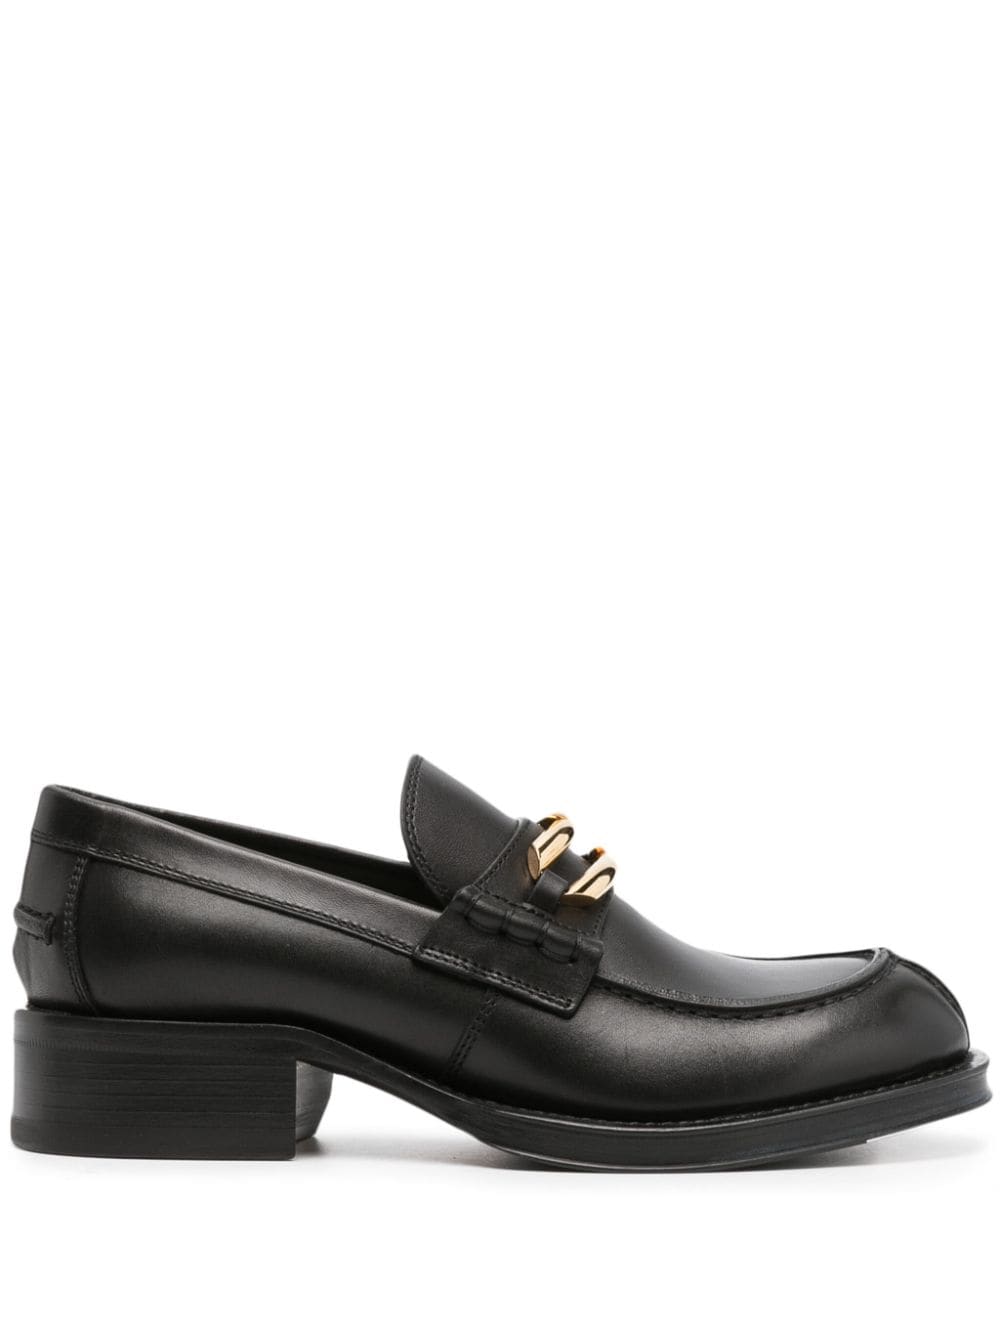 Lanvin buckled leather loafers - Black von Lanvin